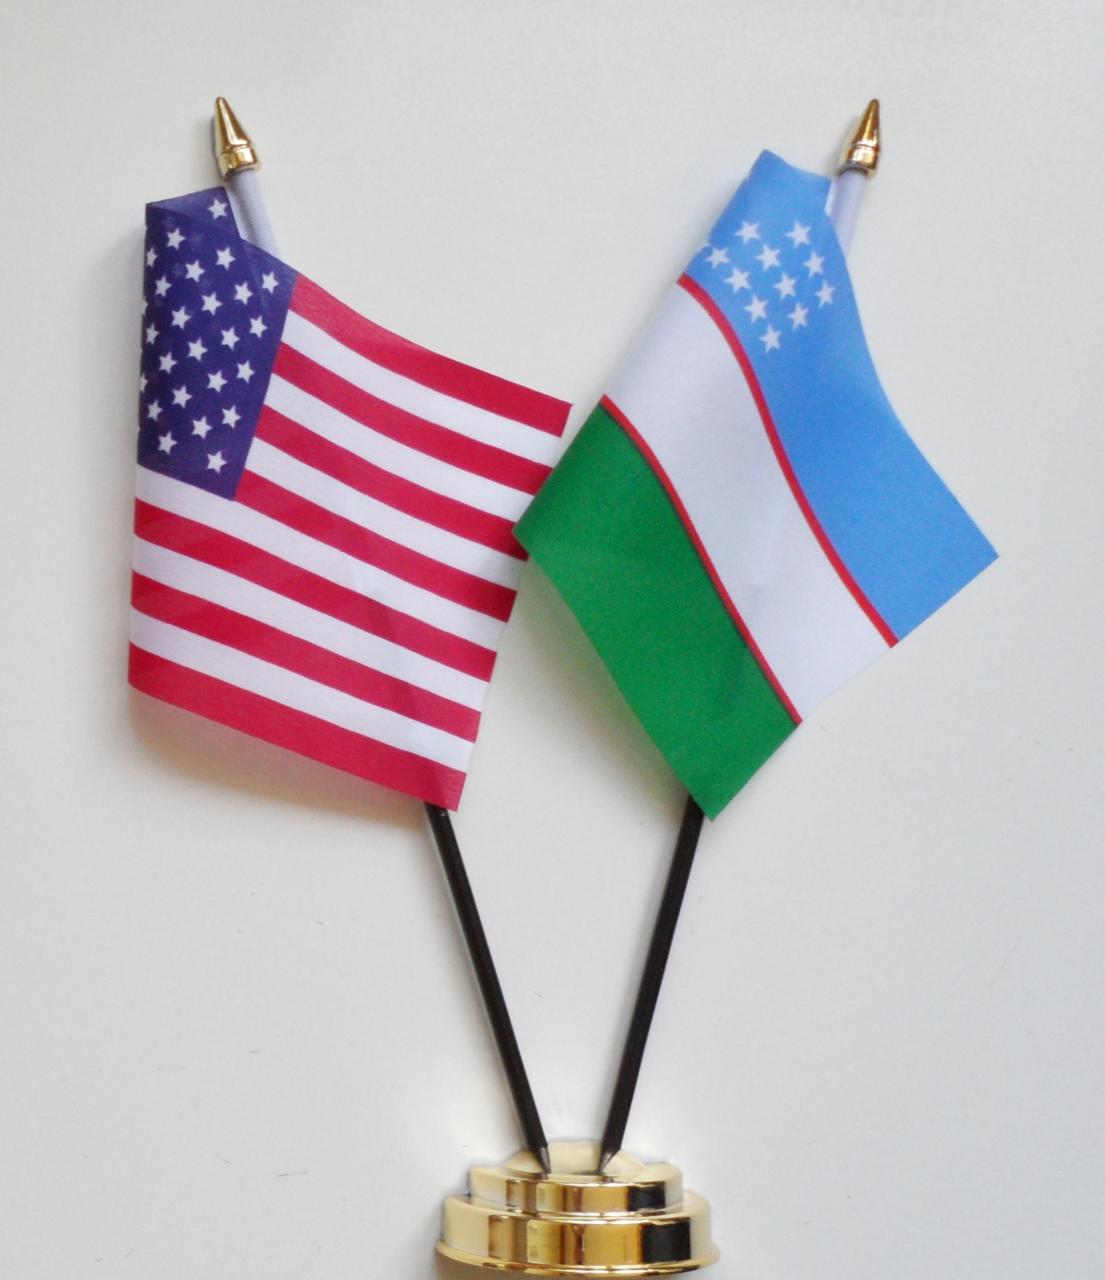 Uzbekistan, U.S. to sign contracts worth $4B